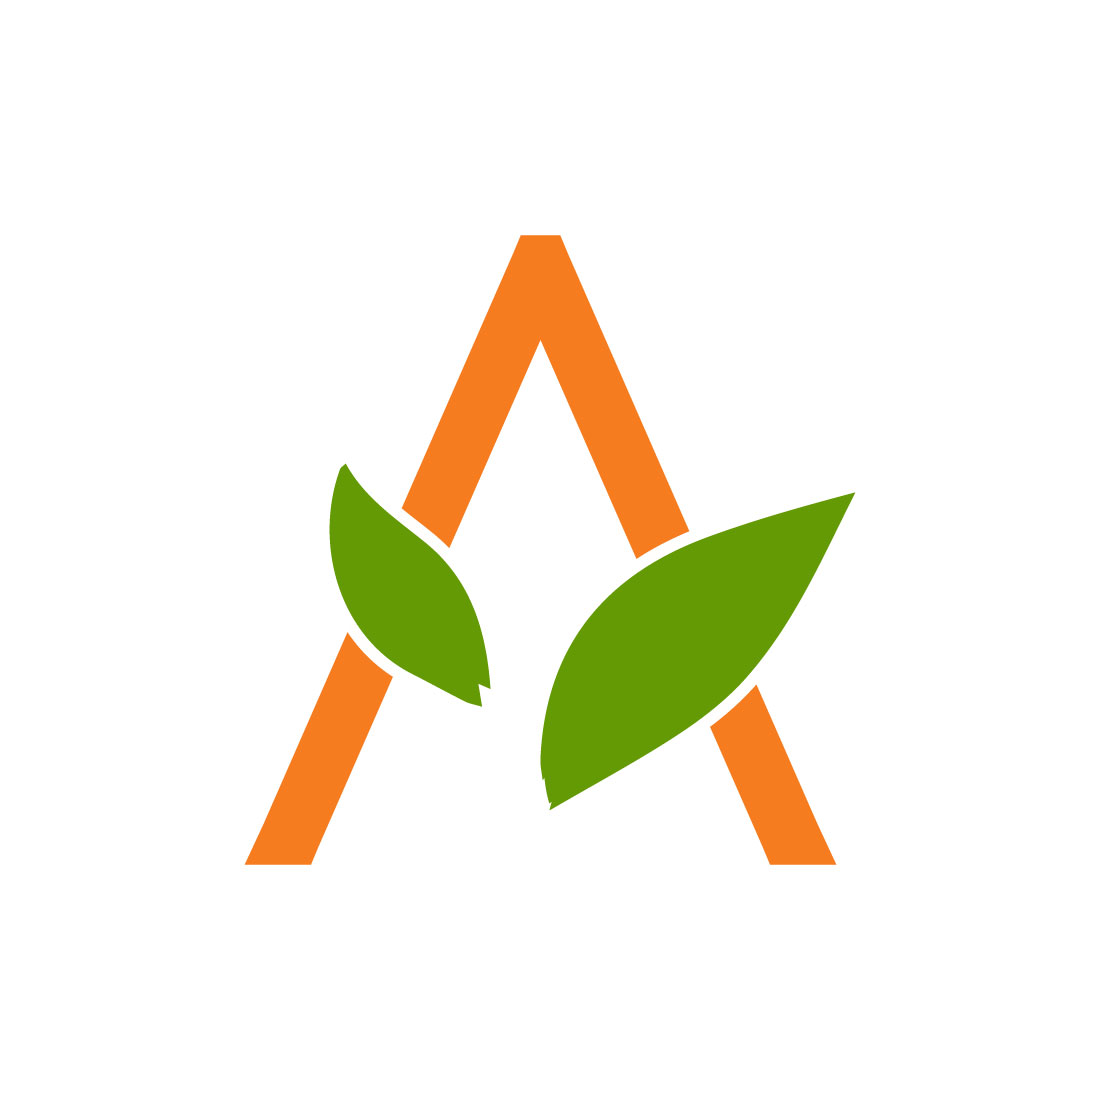 Free A Orange Letter logo preview image.